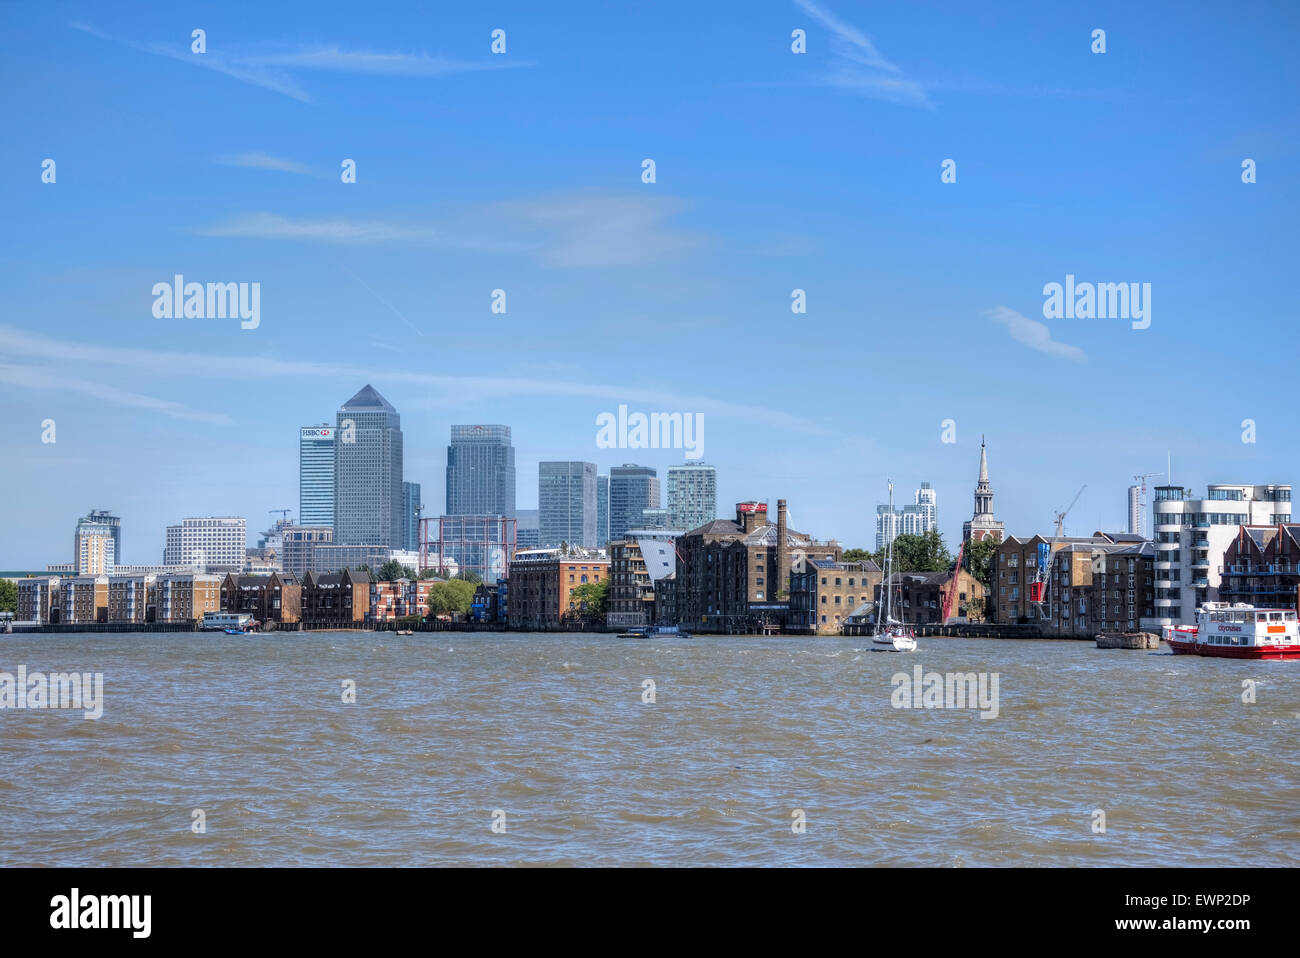 Canary Wharf, London, England, United Kingdom Stock Photo